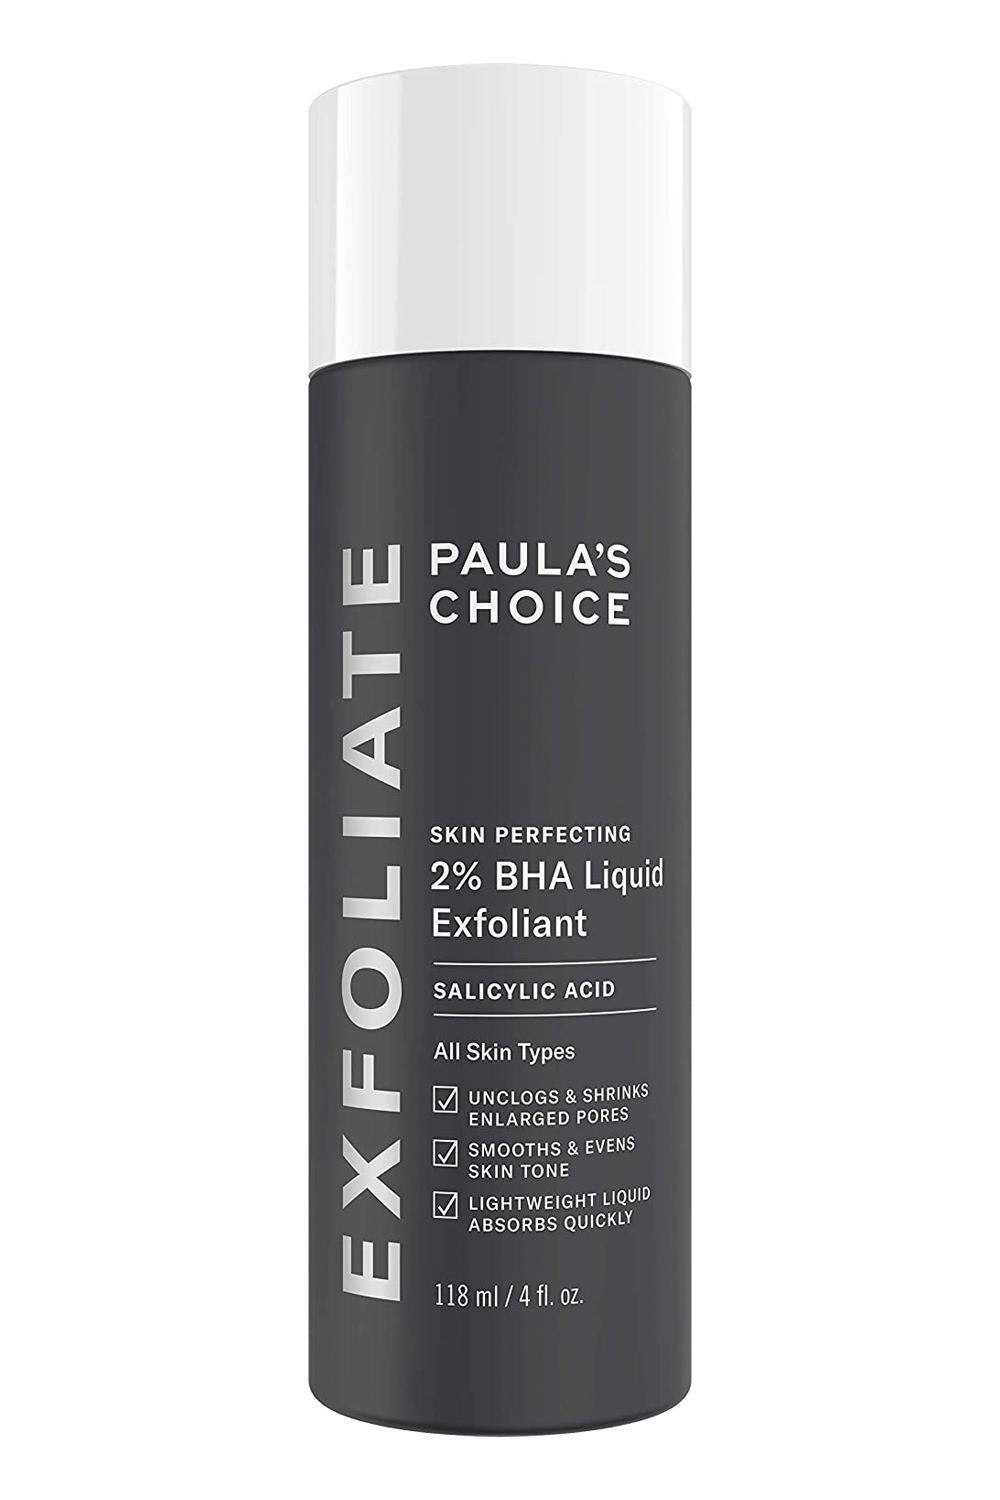 Paulas Choice Skin Perfecting 2% BHA Liquid Salicylic Acid Exfoliant